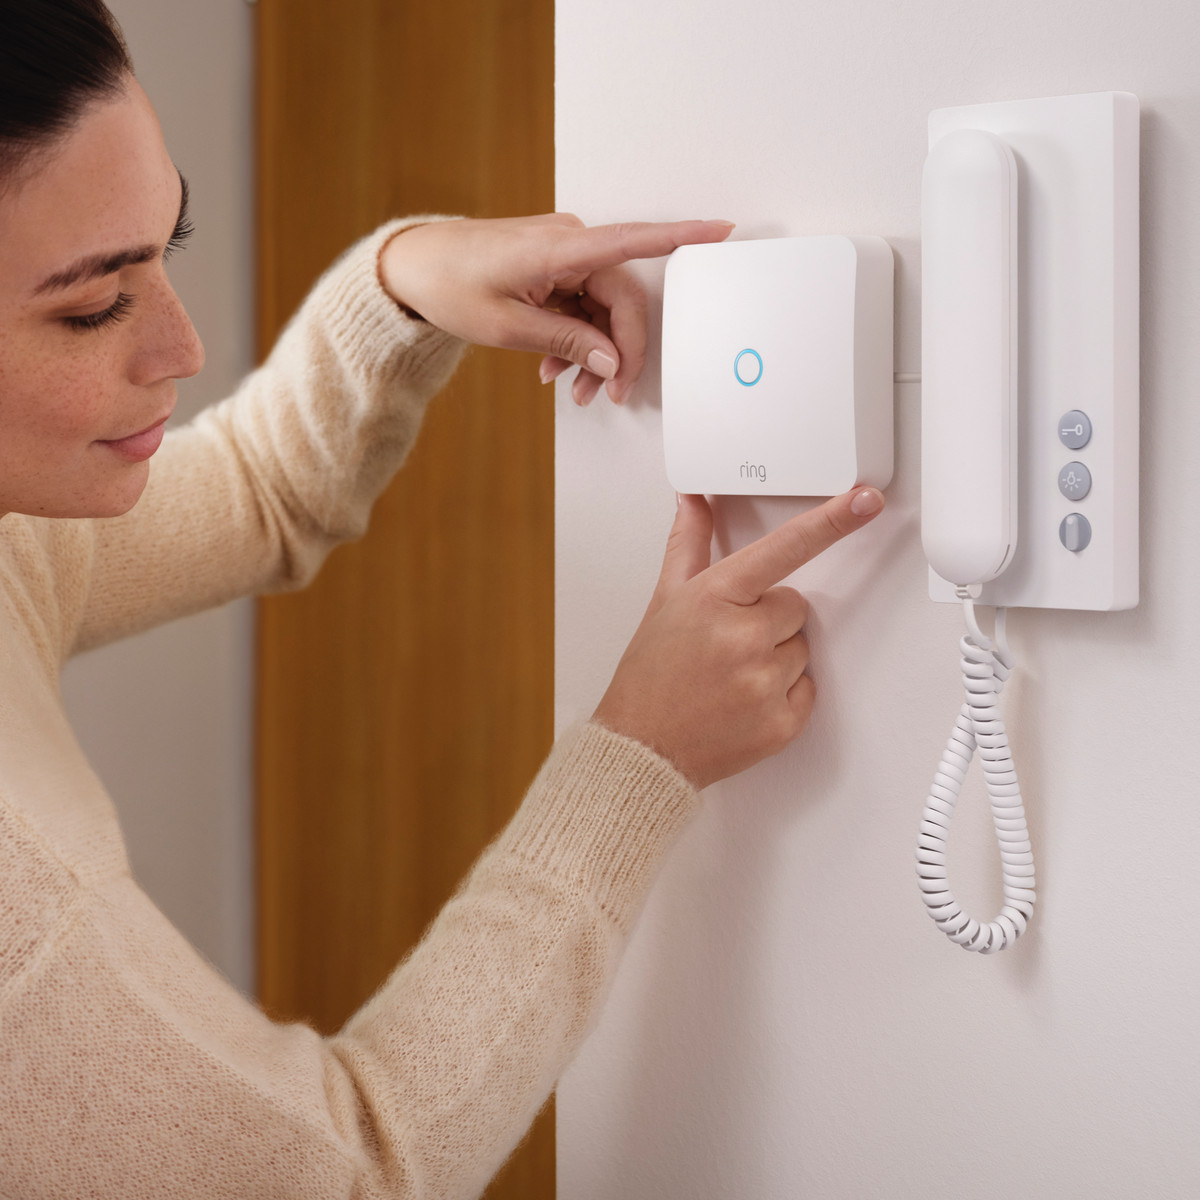 Ring’s latest gadget makes your apartment intercom smart